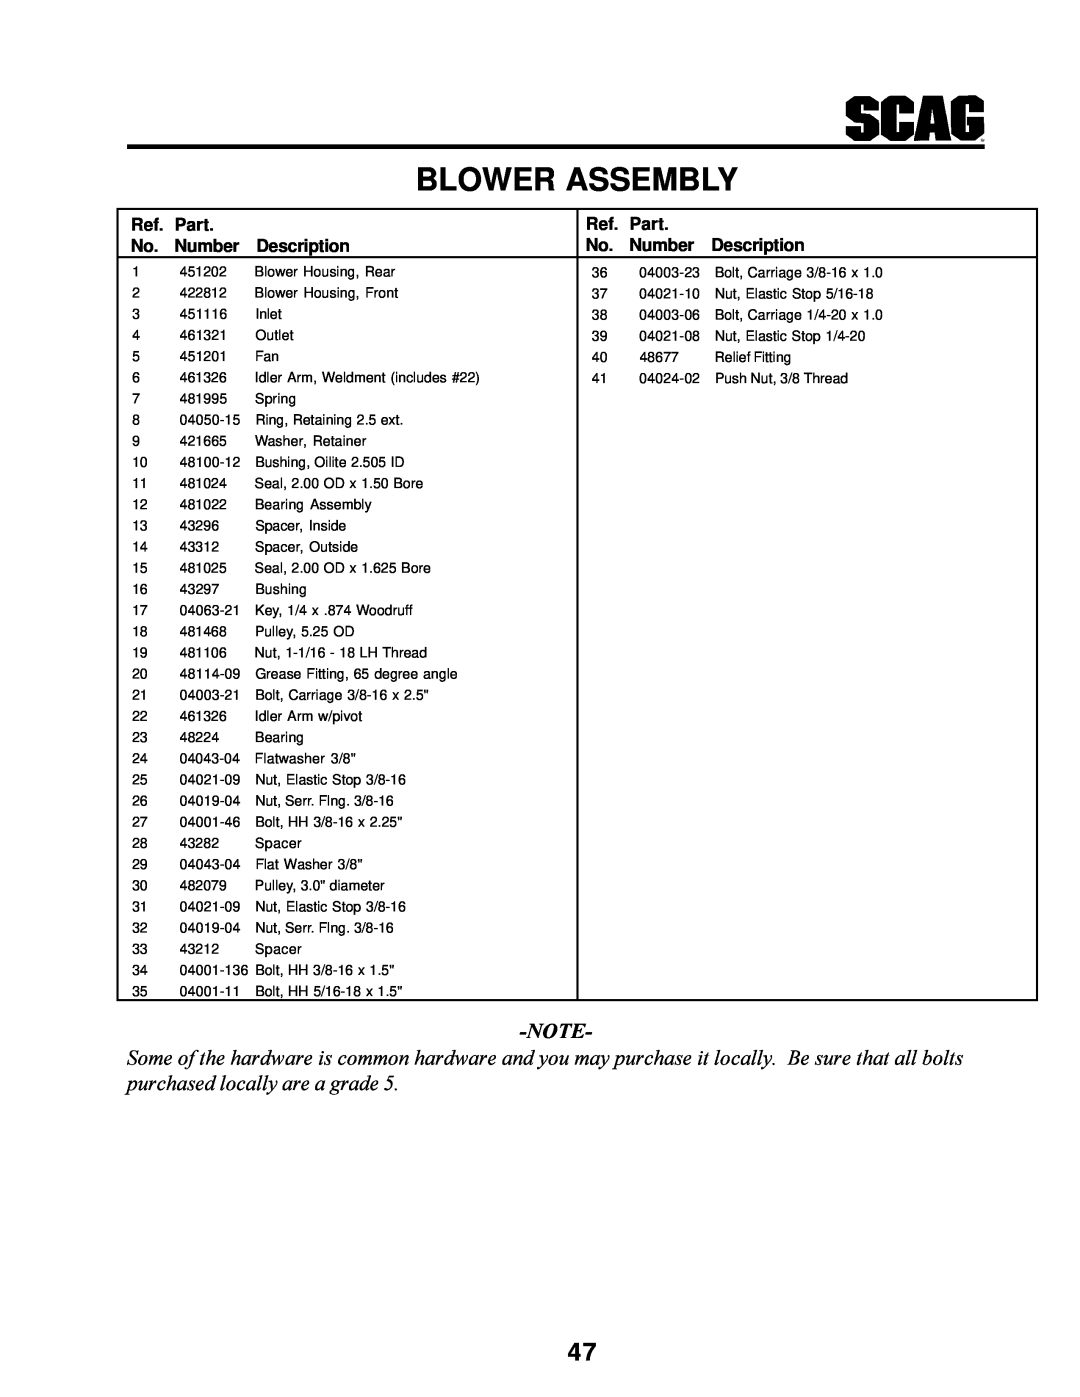 MB QUART SCR manual Blower Assembly, Part, Number, Description 